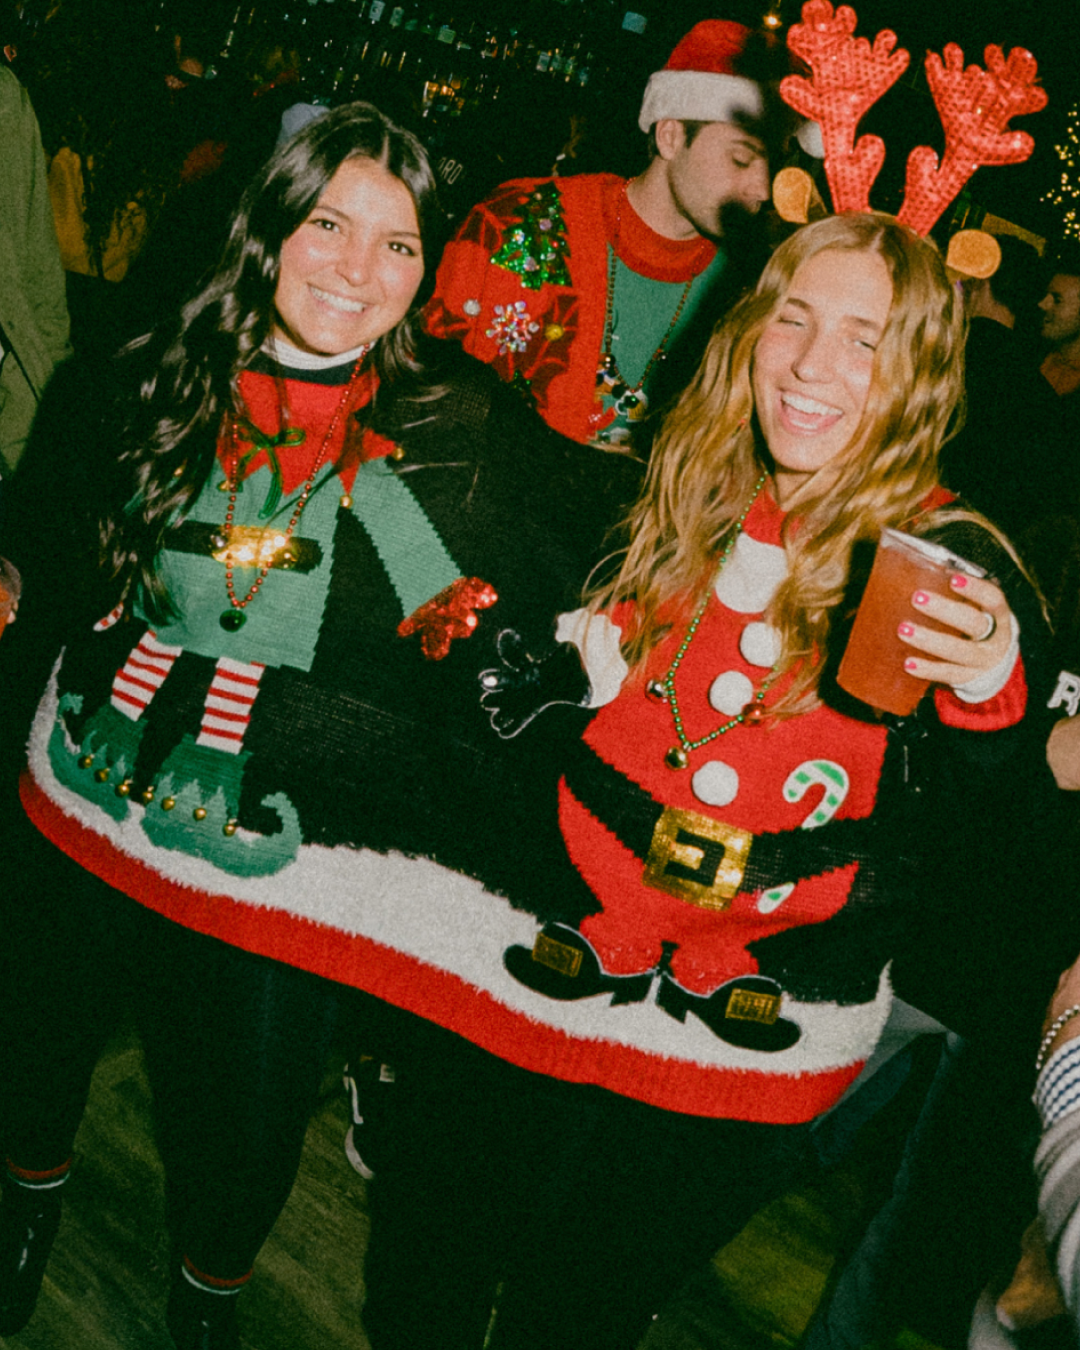 2 girls sharing one christmas sweater cheersing the camera during the holiday bar crawl